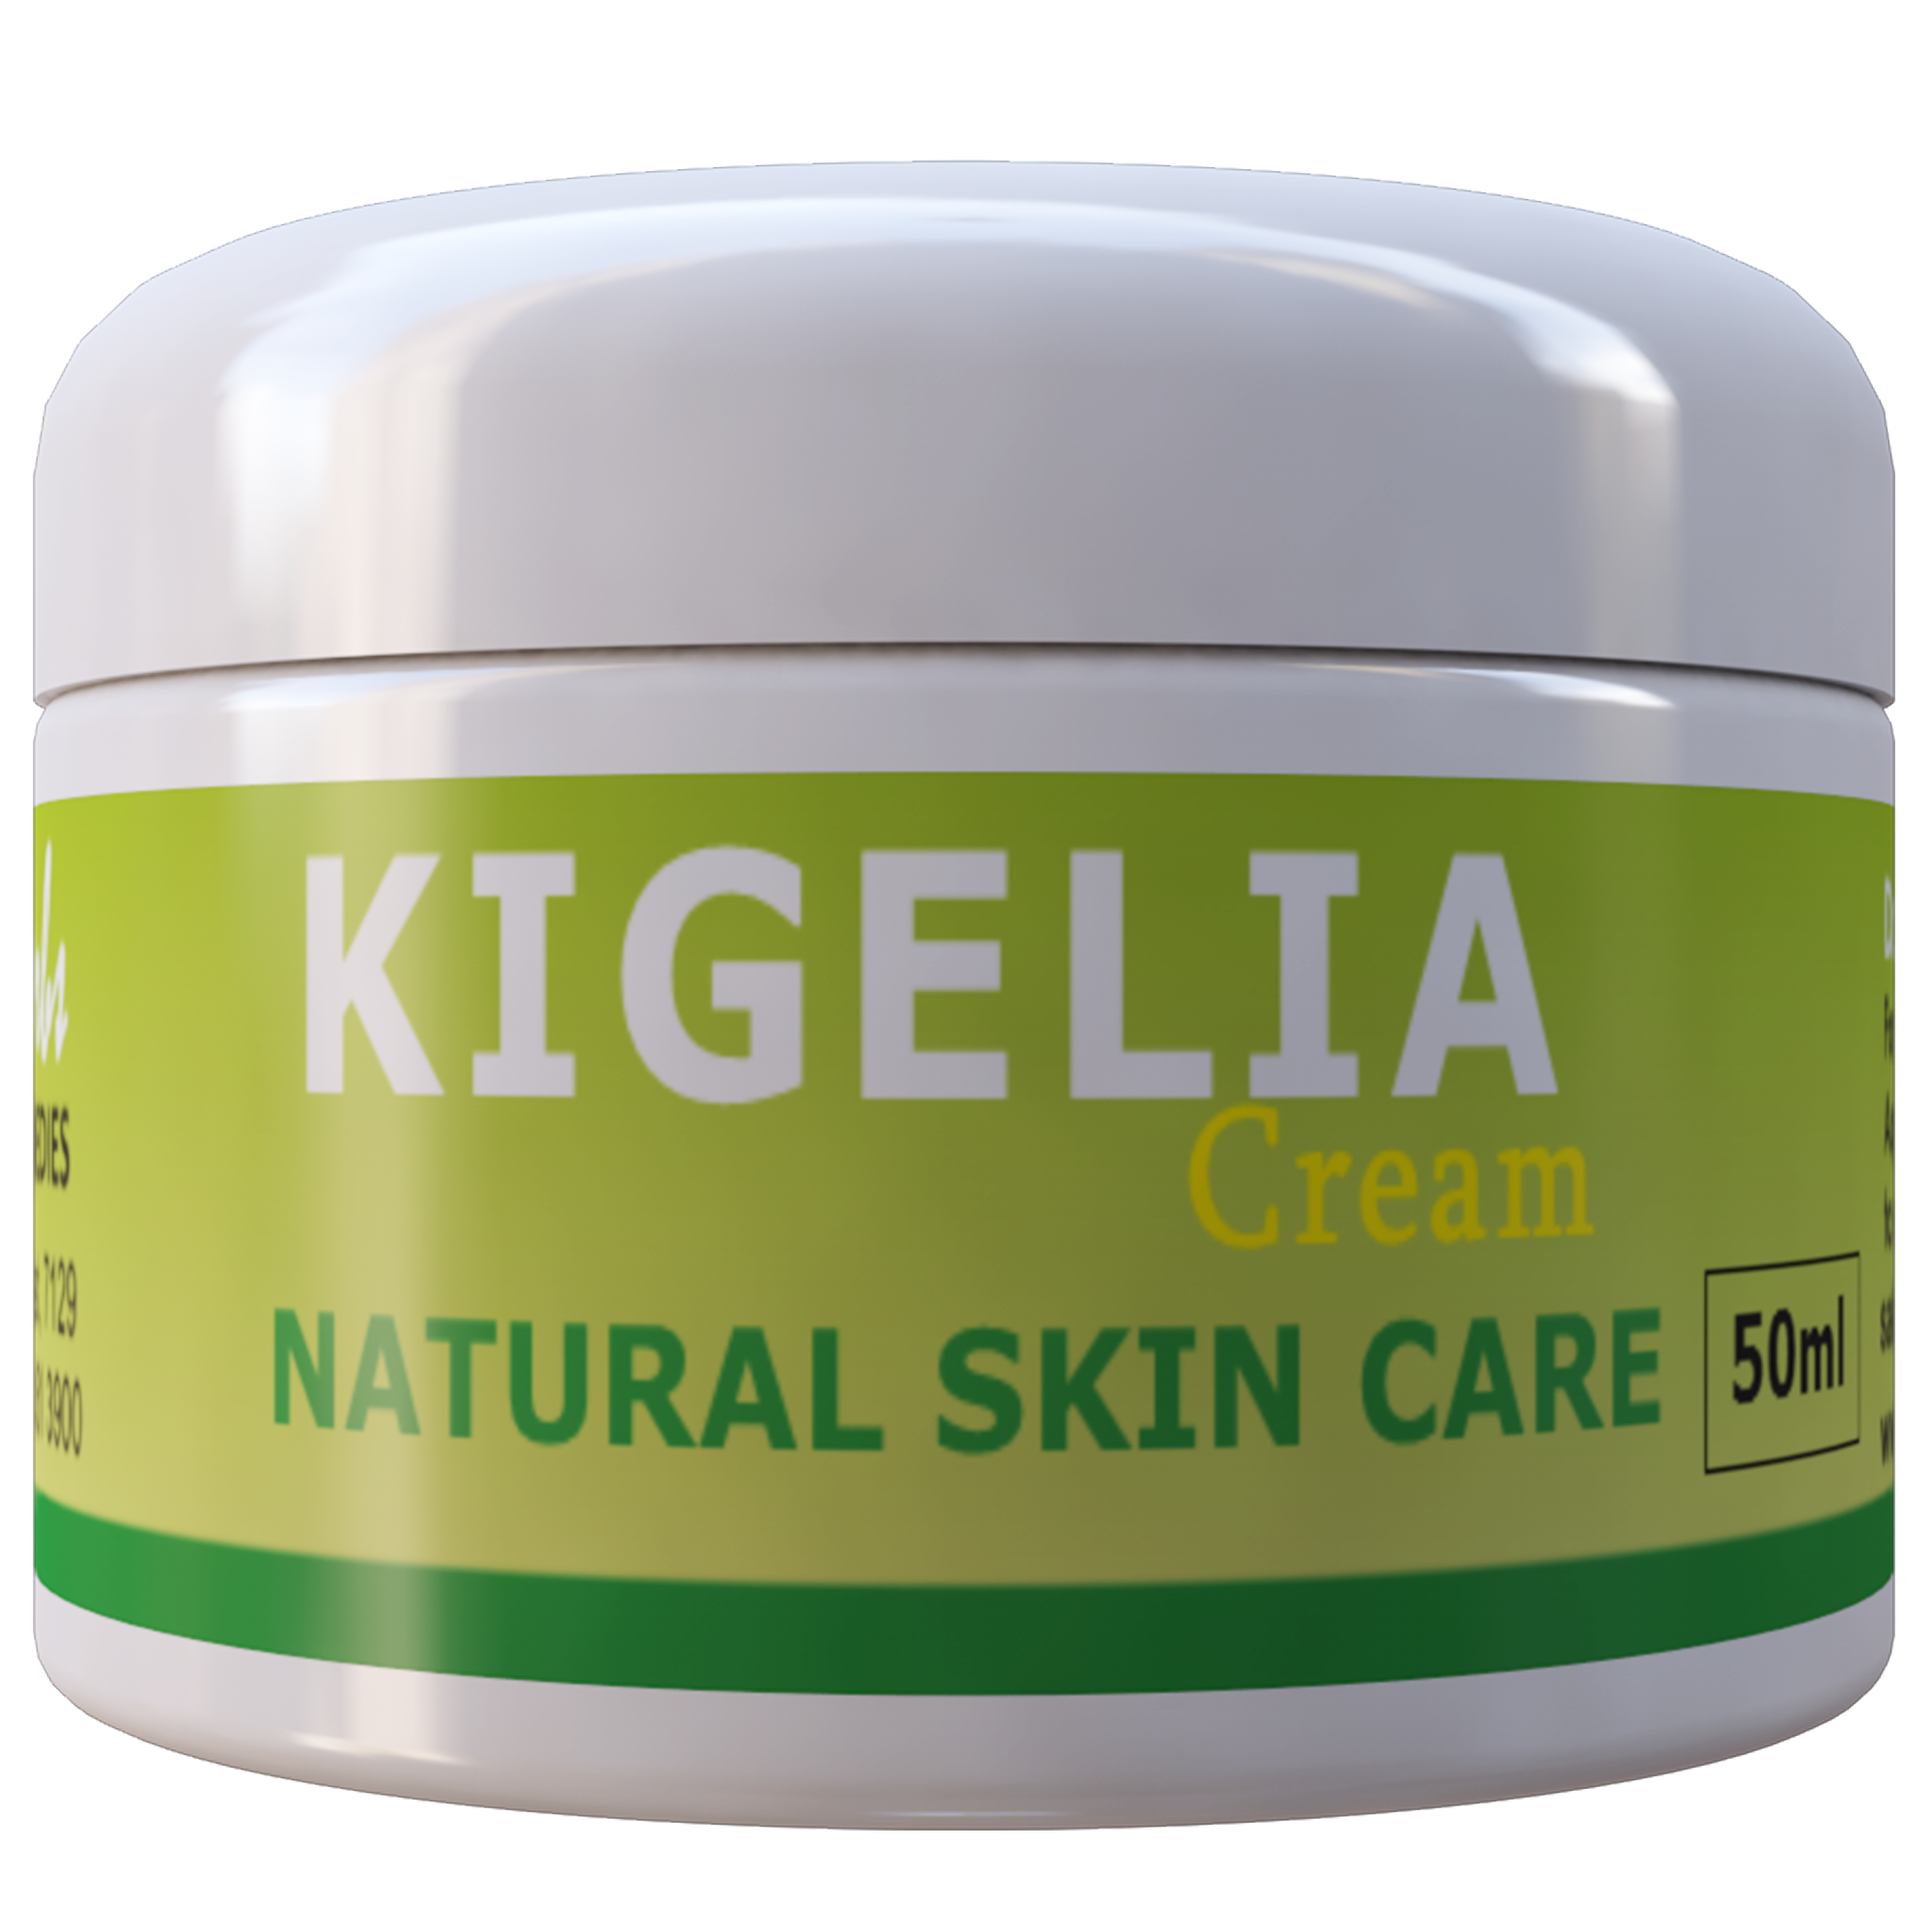 Kigelia Cream 50ml for Eczema, Psoriasis, Dermatitis, Cold Sores, Verrucas